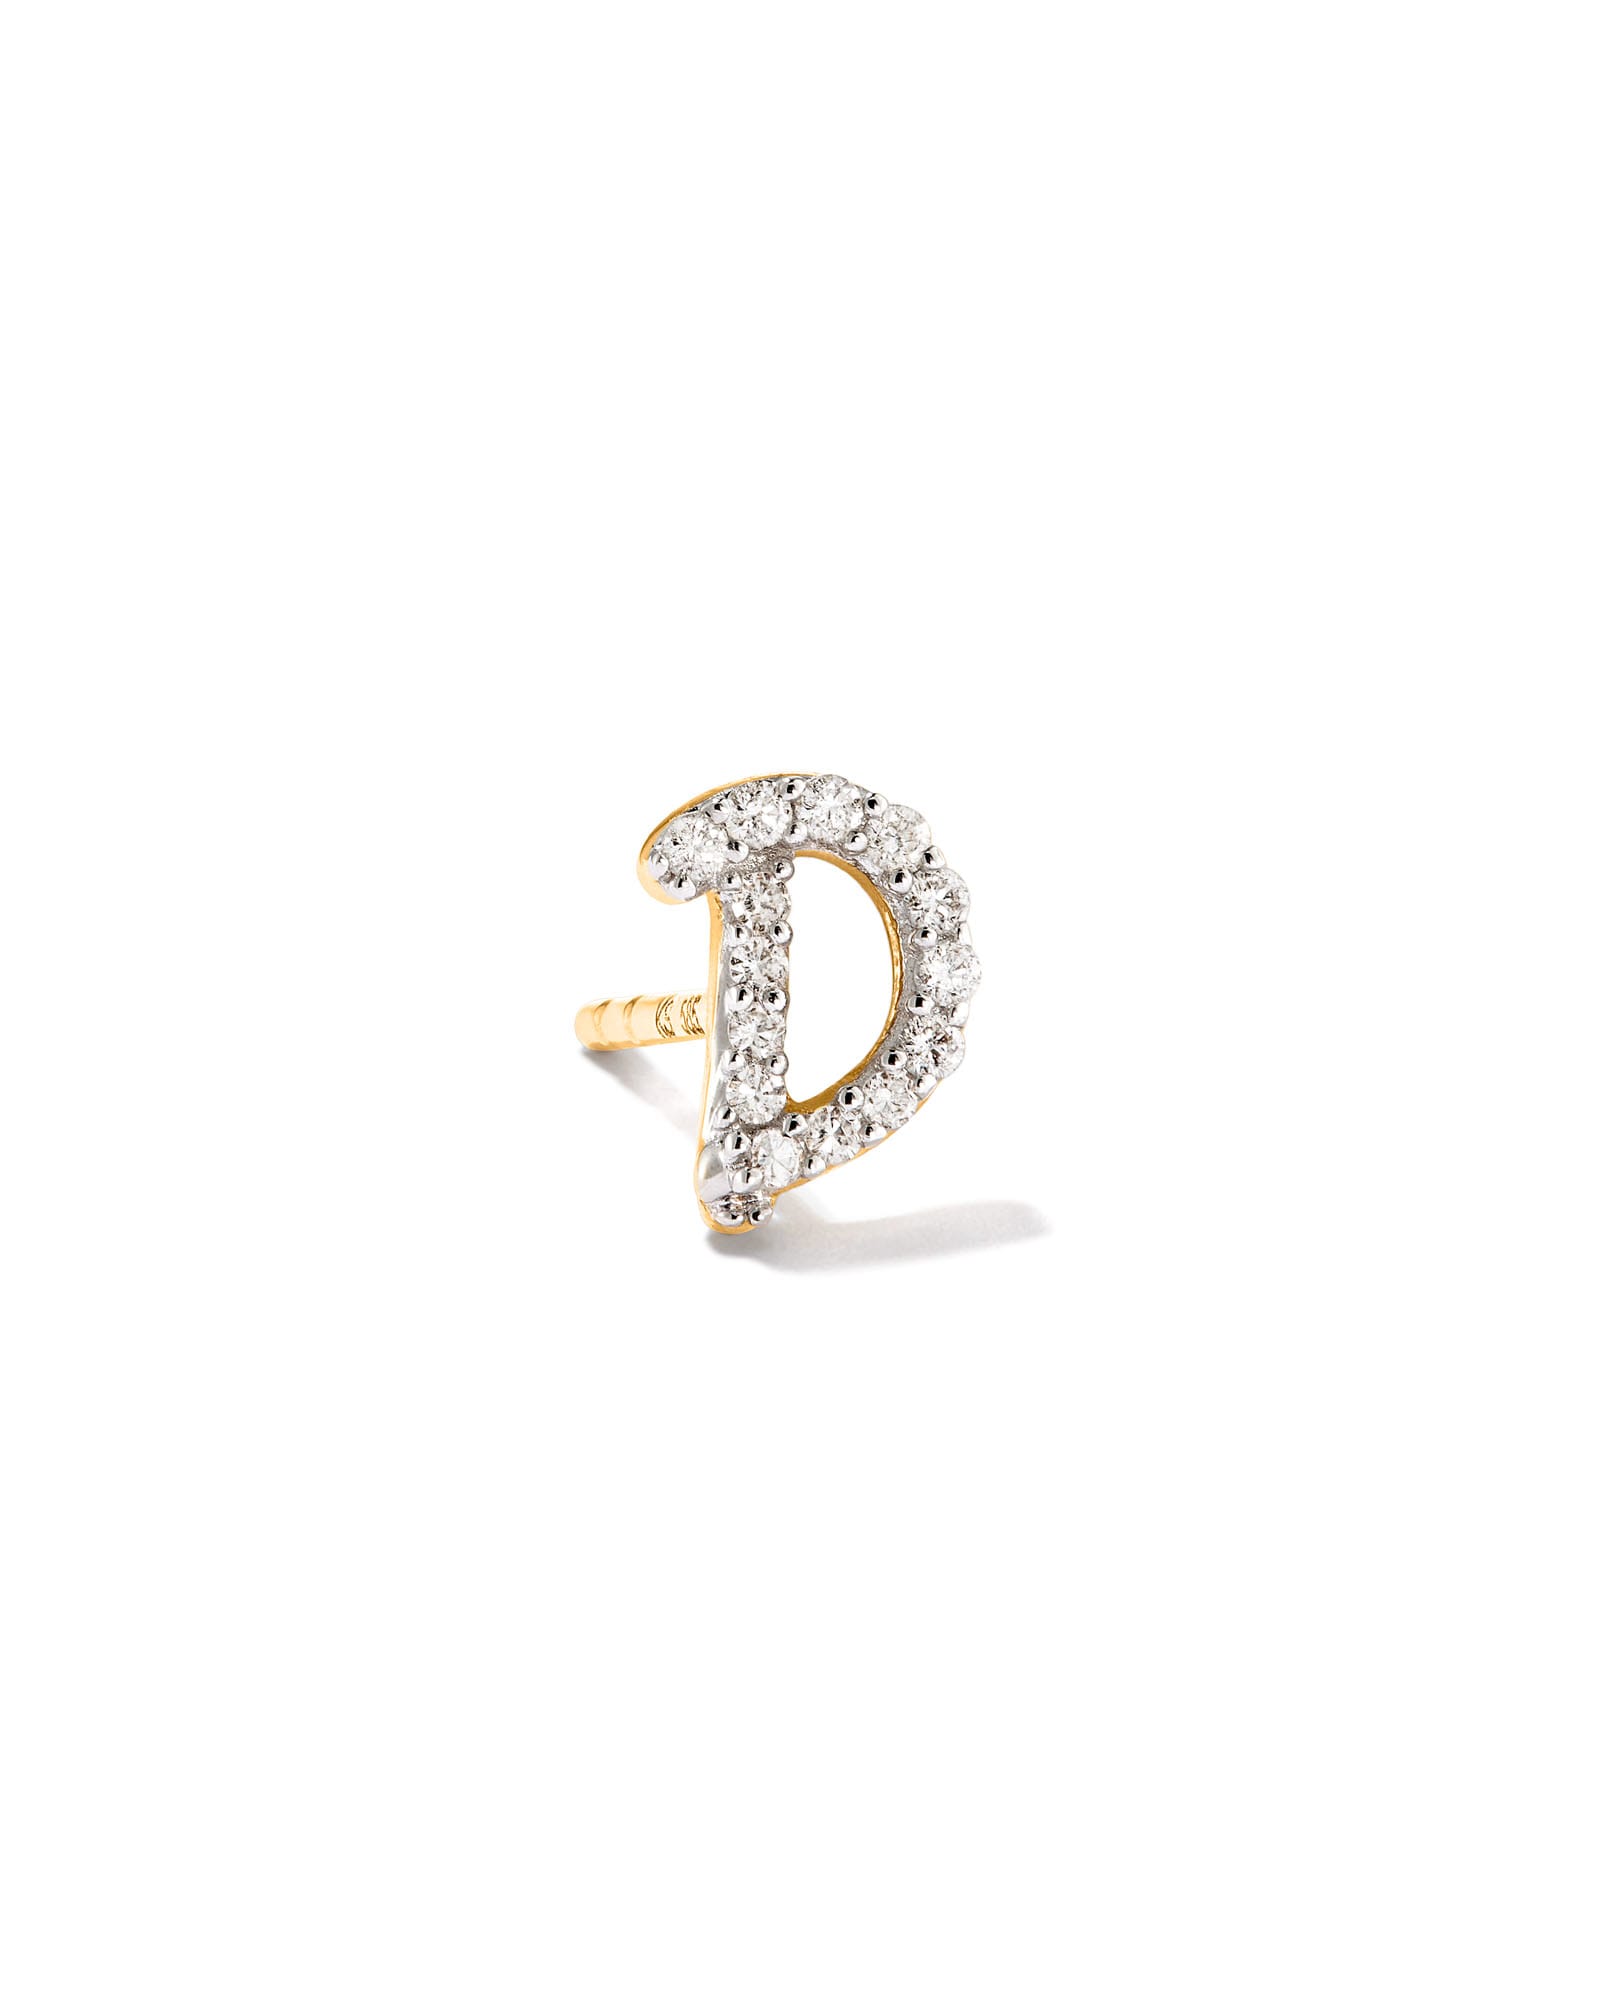 Kendra Scott Letter D 14k Yellow Gold Single Stud Earring in White Diamond | Diamonds